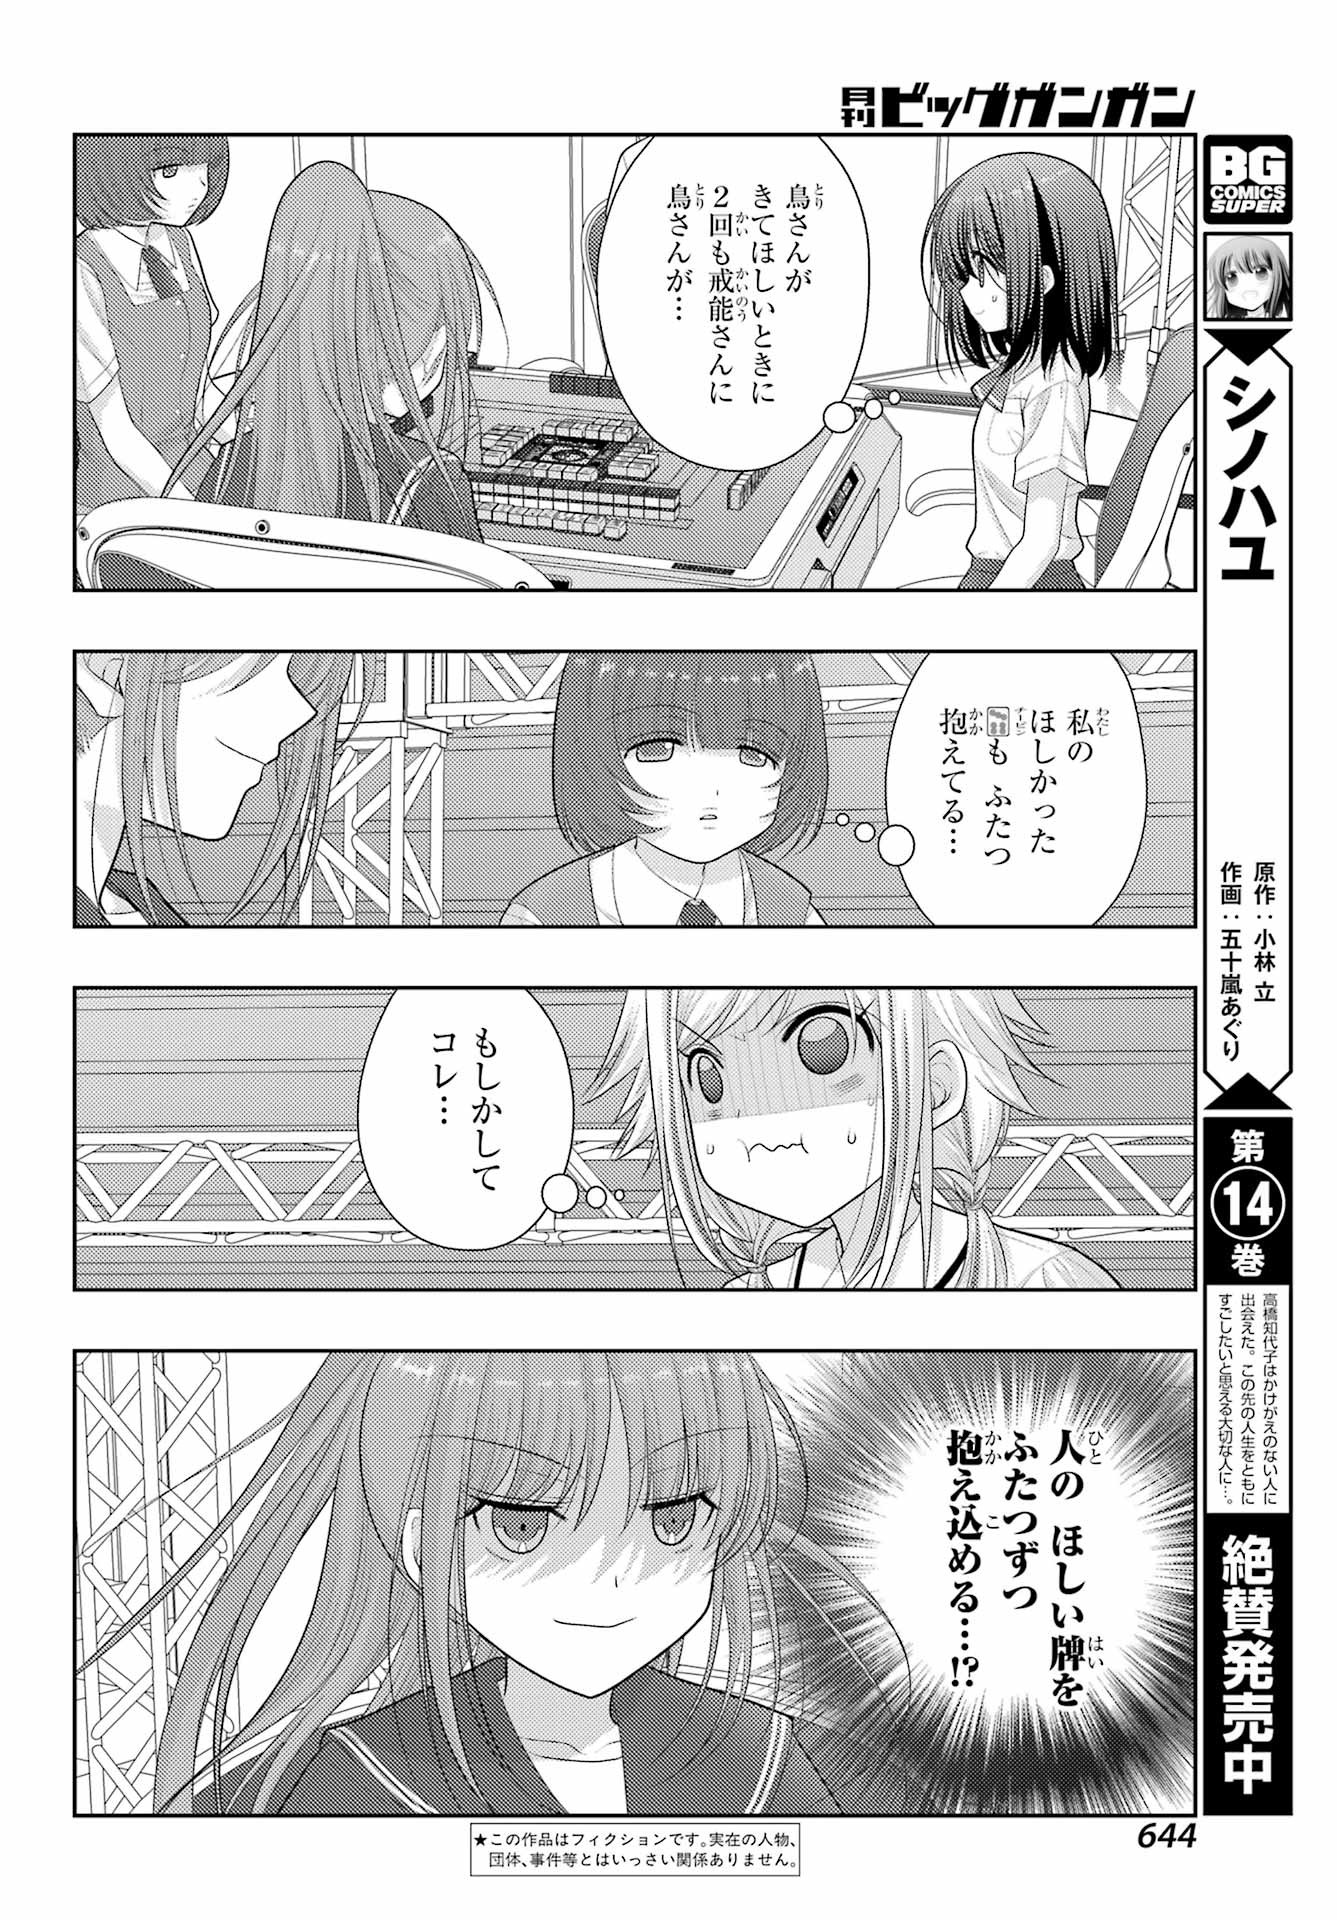 Shinohayu - The Dawn of Age Manga - Chapter 097 - Page 2